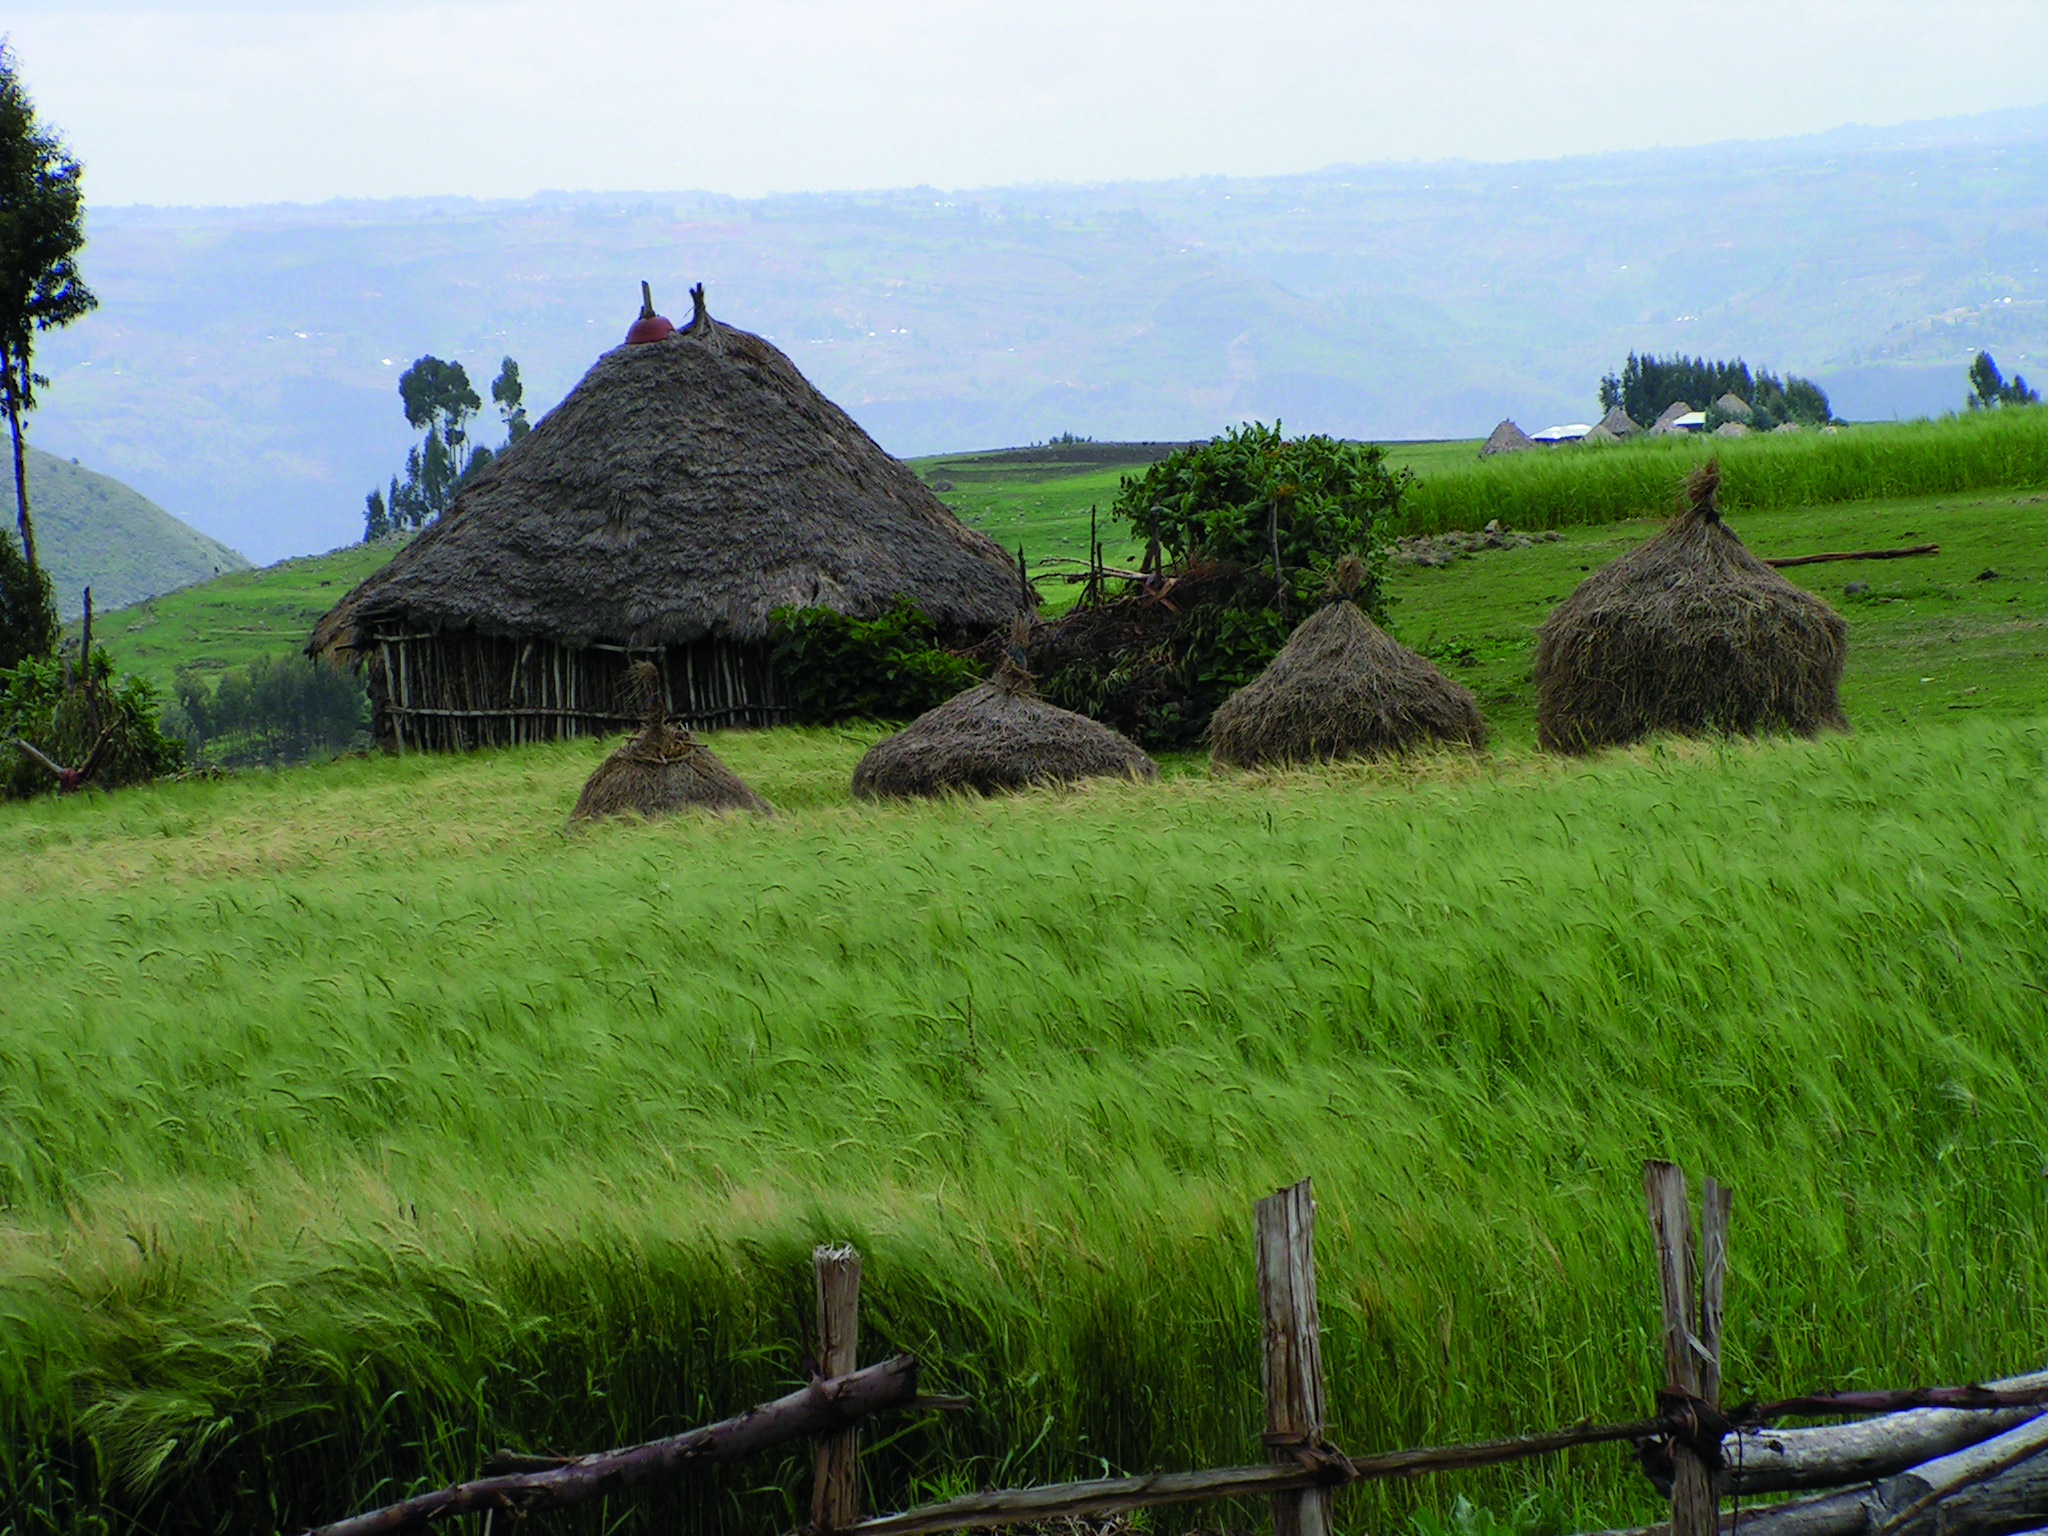 Ethiopian village